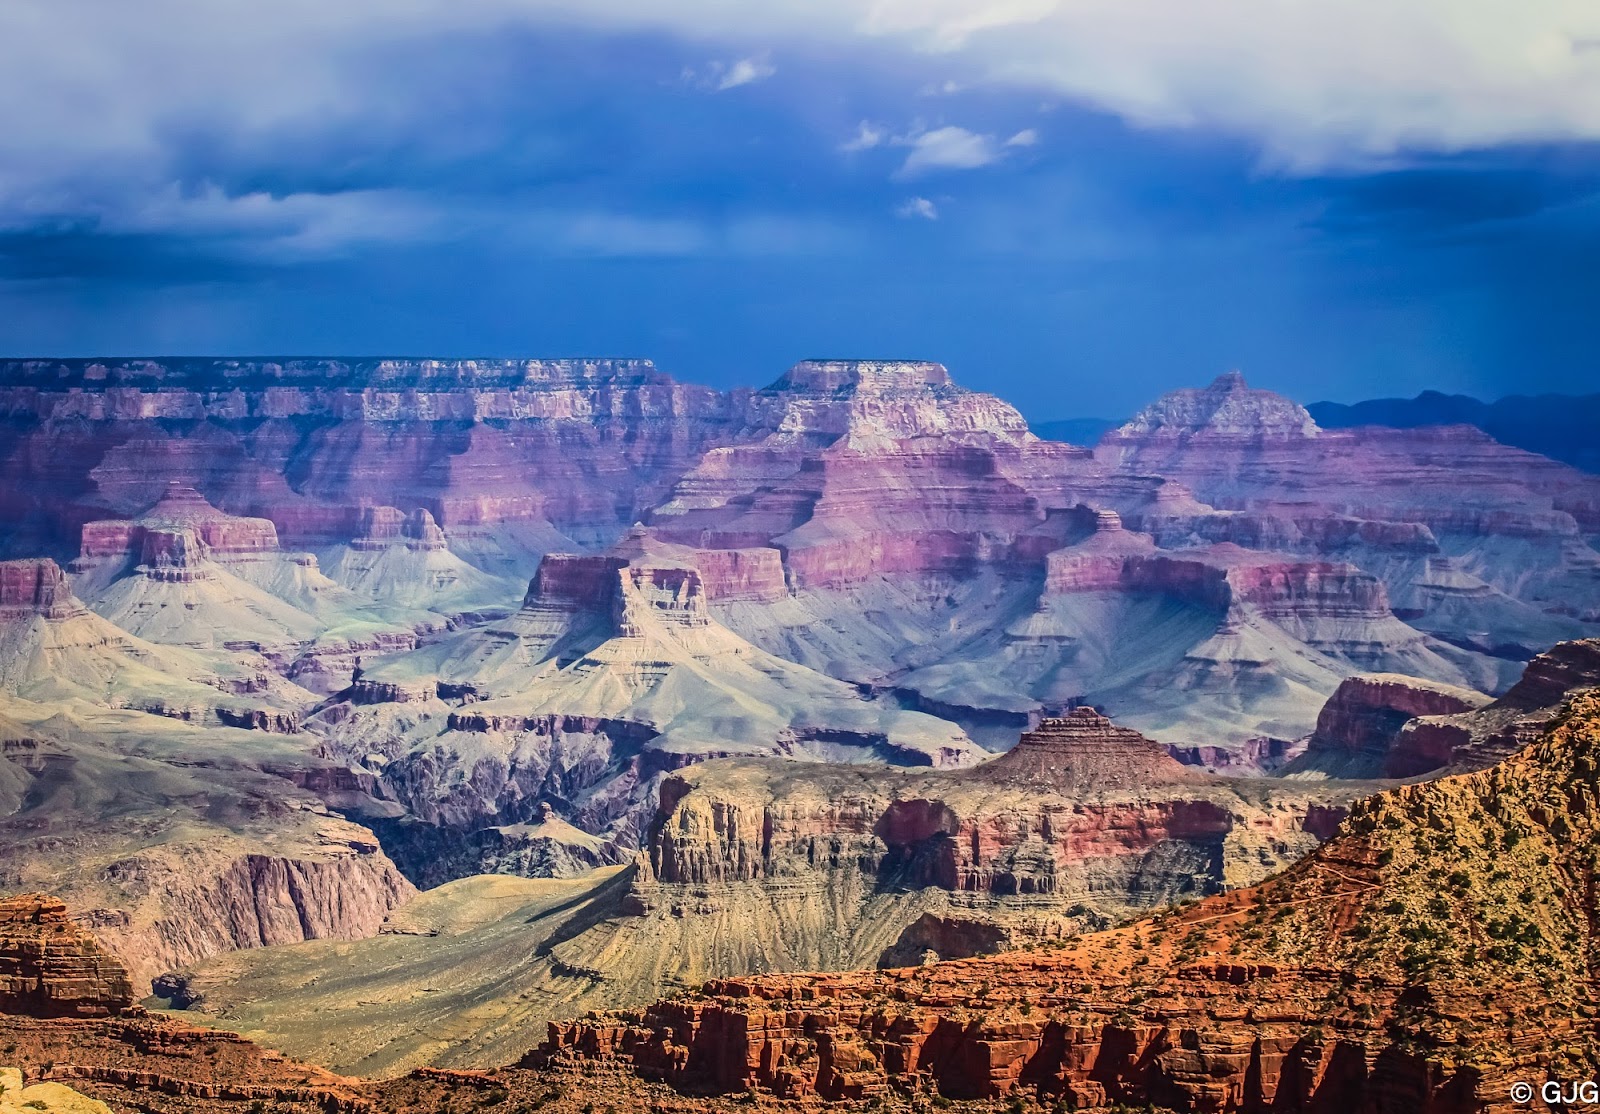 The Grand Canyon National Park in Arizona, USA